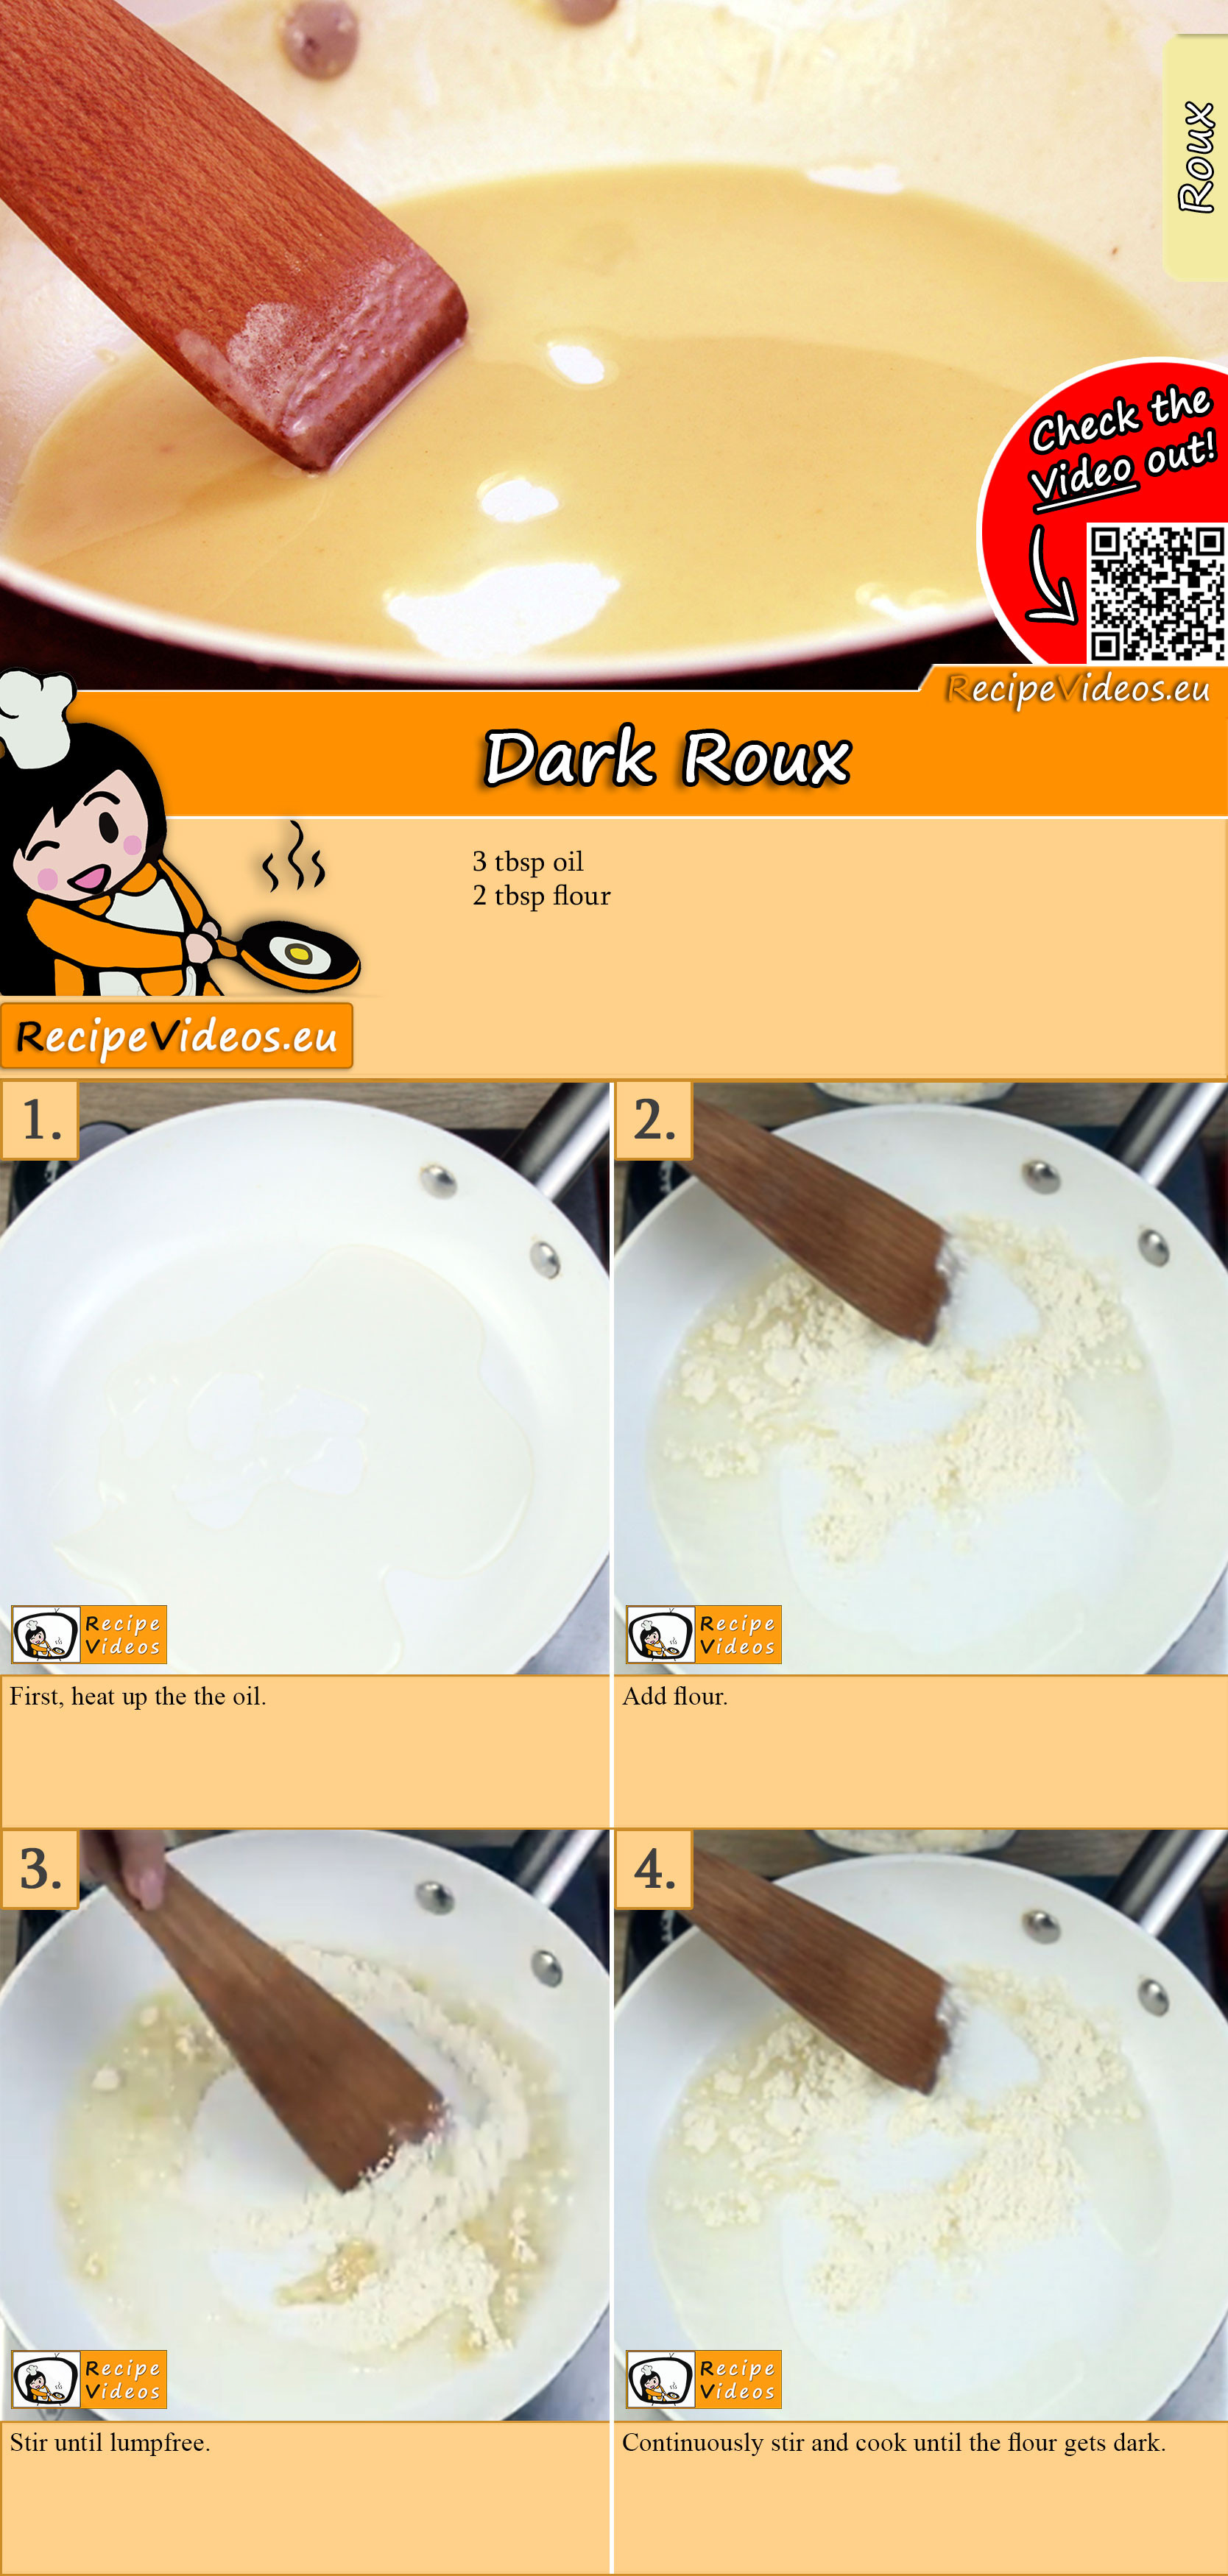 Dark Roux recipe with video